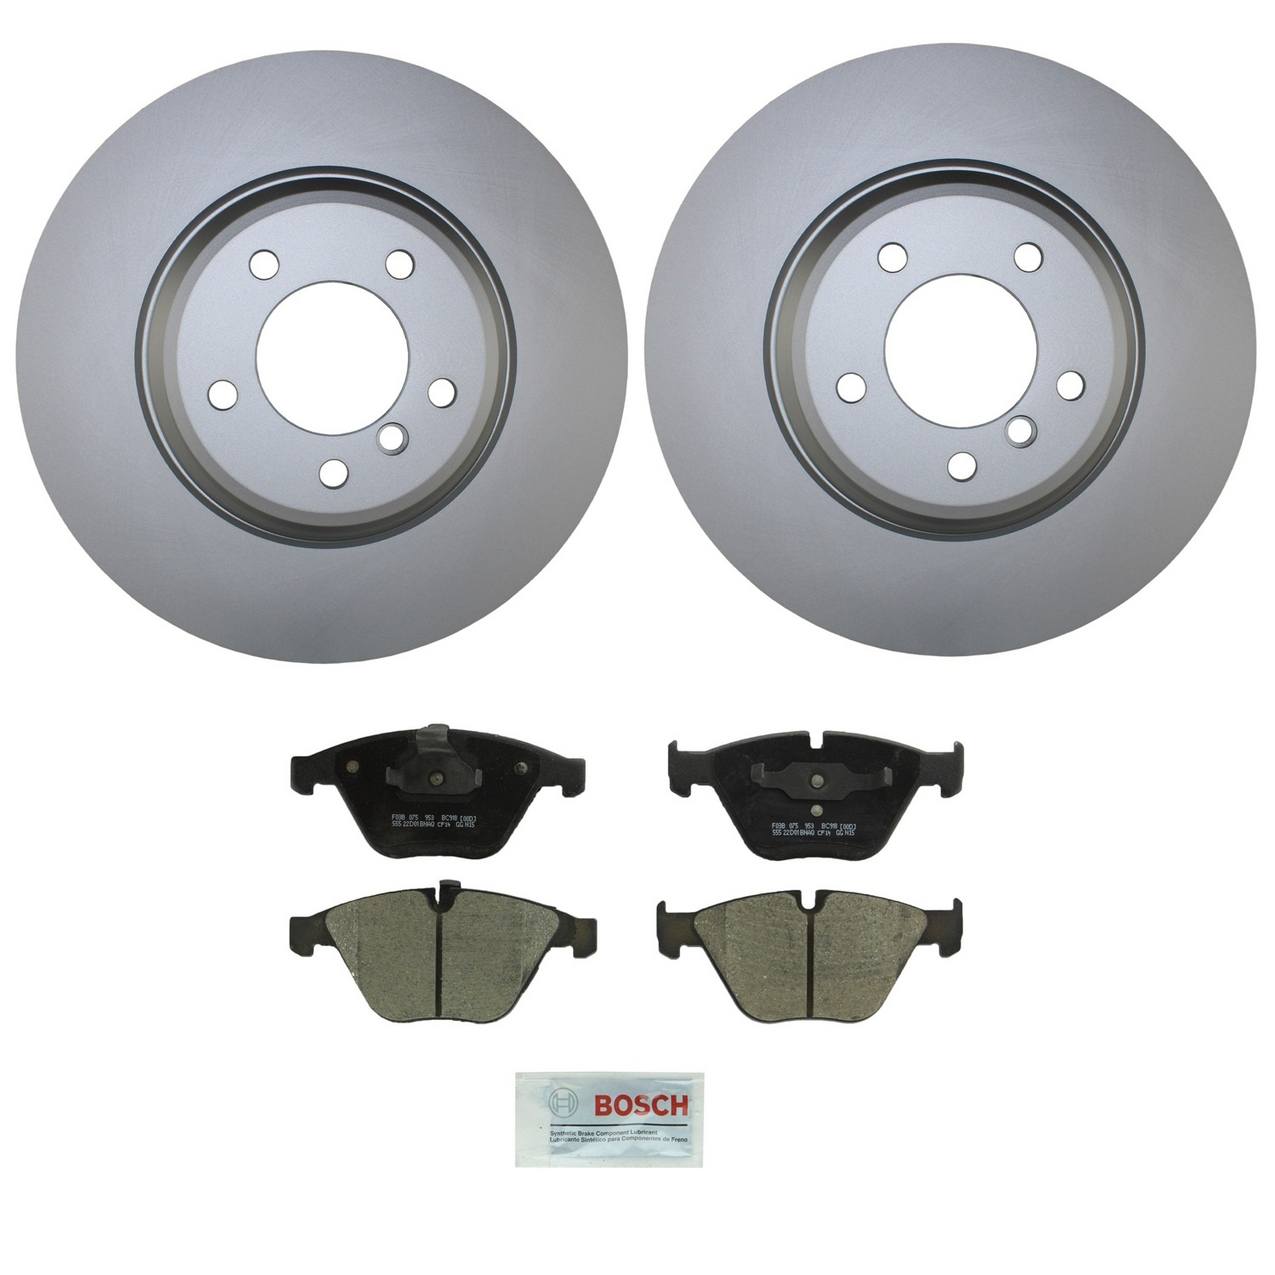 BMW Brake Kit – Front 348mm Rotors Ceramic Pads – Bosch QuietCast